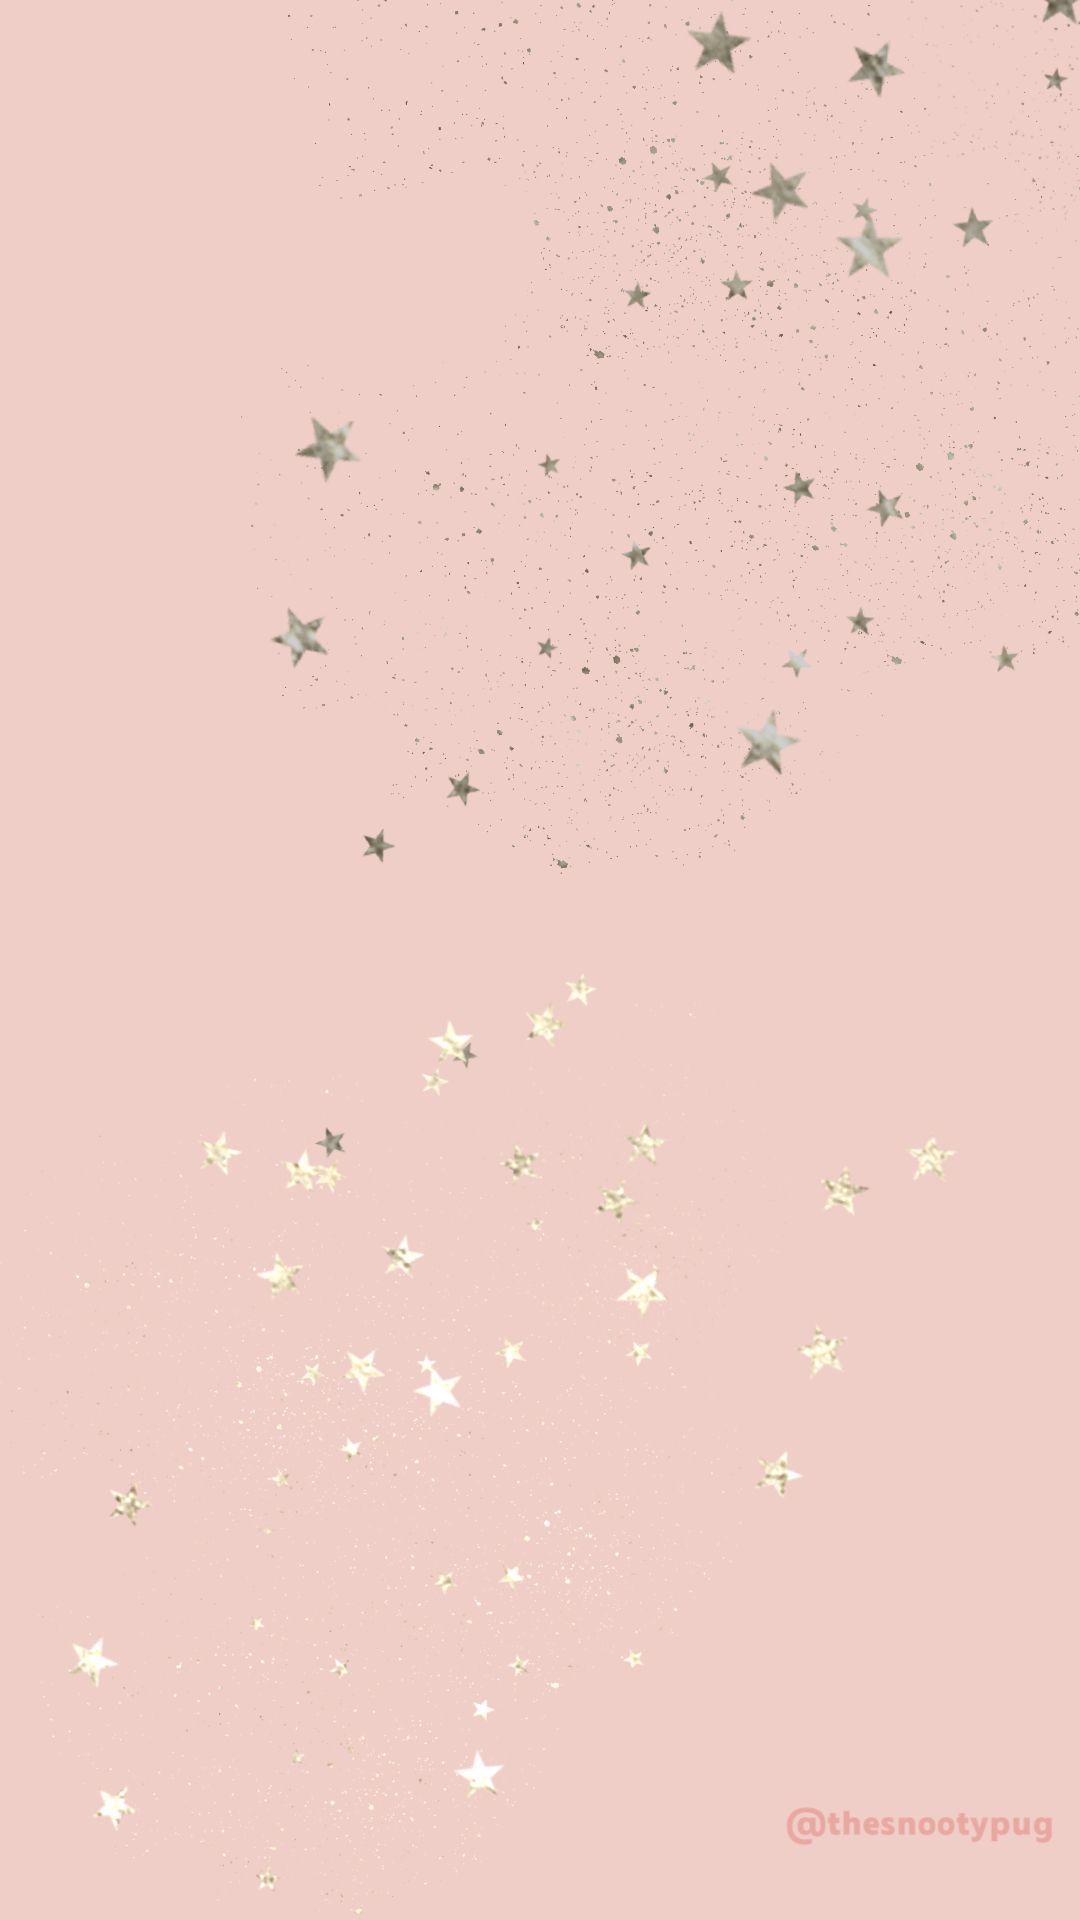 papier peint rose étoiles. Star wallpaper, iPhone background wallpaper, iPhone background